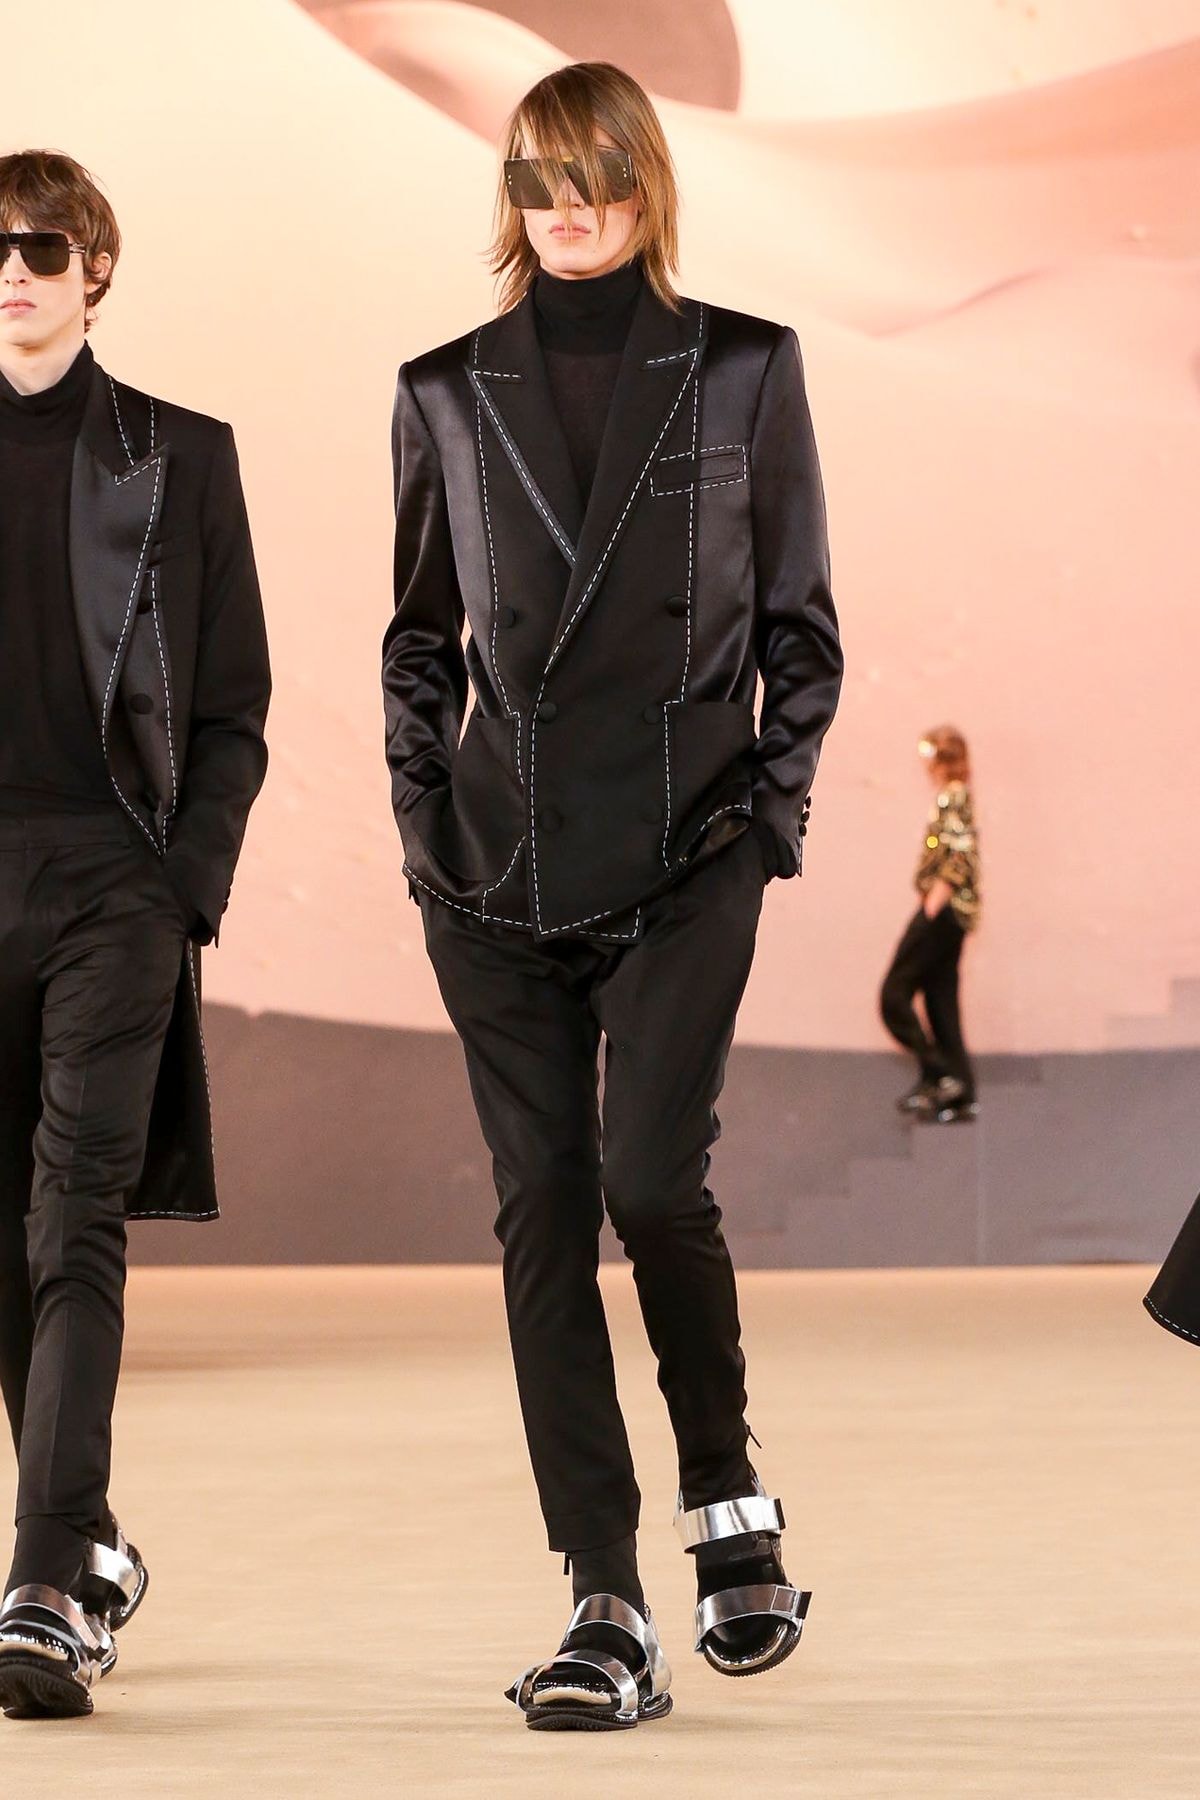 Balmain Menswear Fall Winter 2020 Paris Fashion Week olivier rousteing